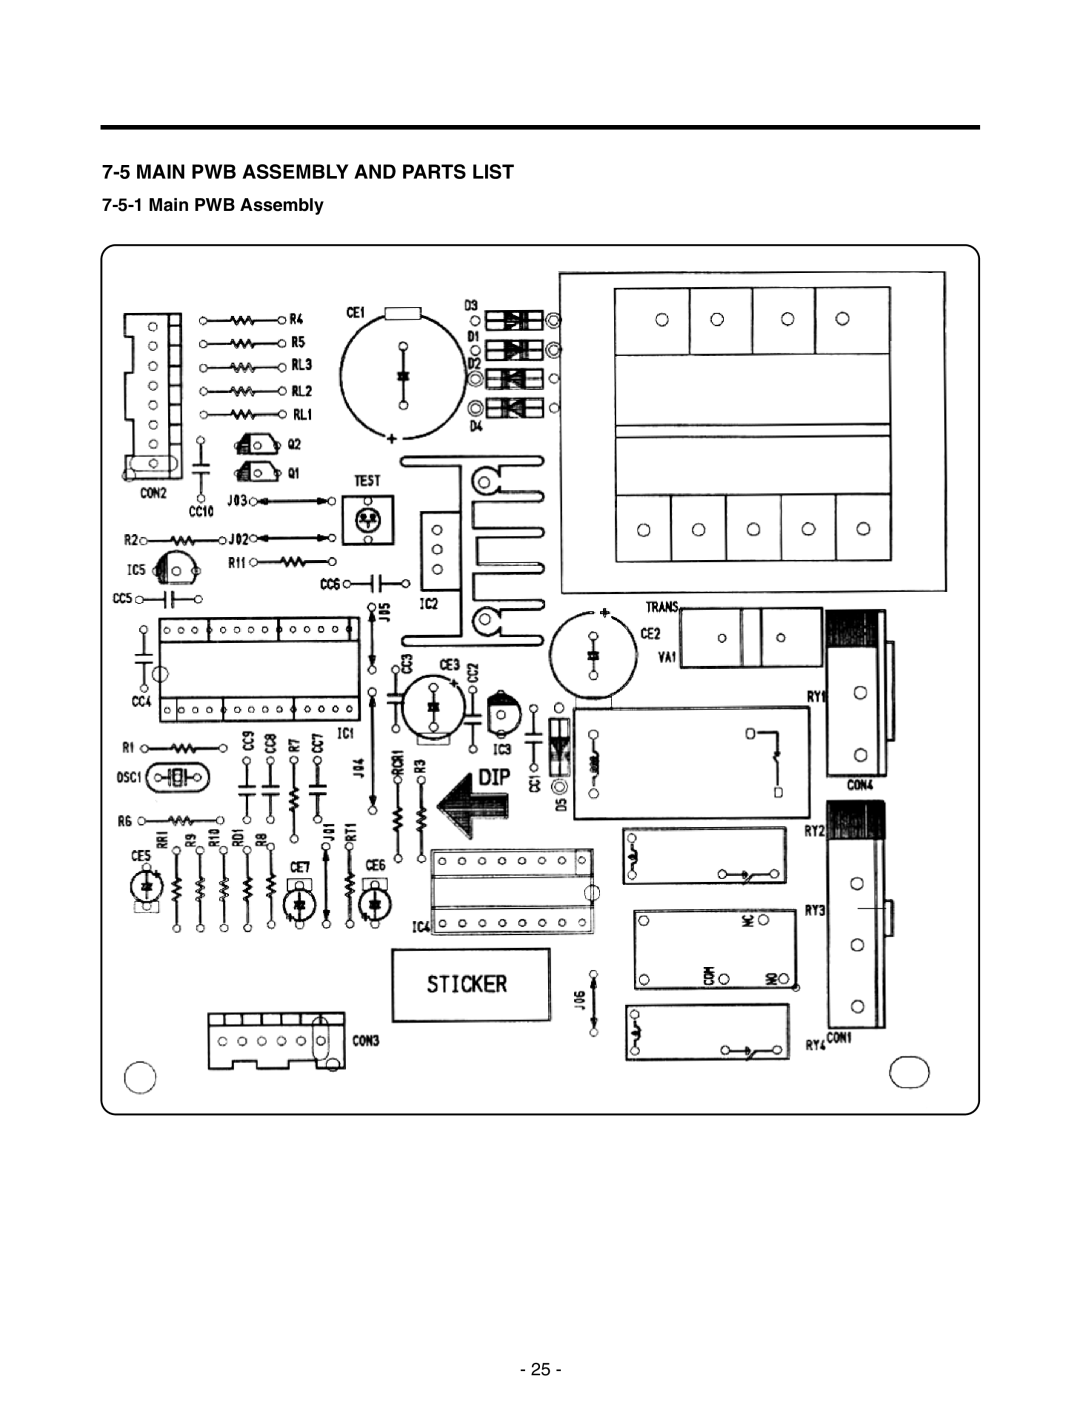 LG Electronics LRTN19310, LRTN22310 service manual Main Pwb Assembly And Parts List, Main PWB Assembly 